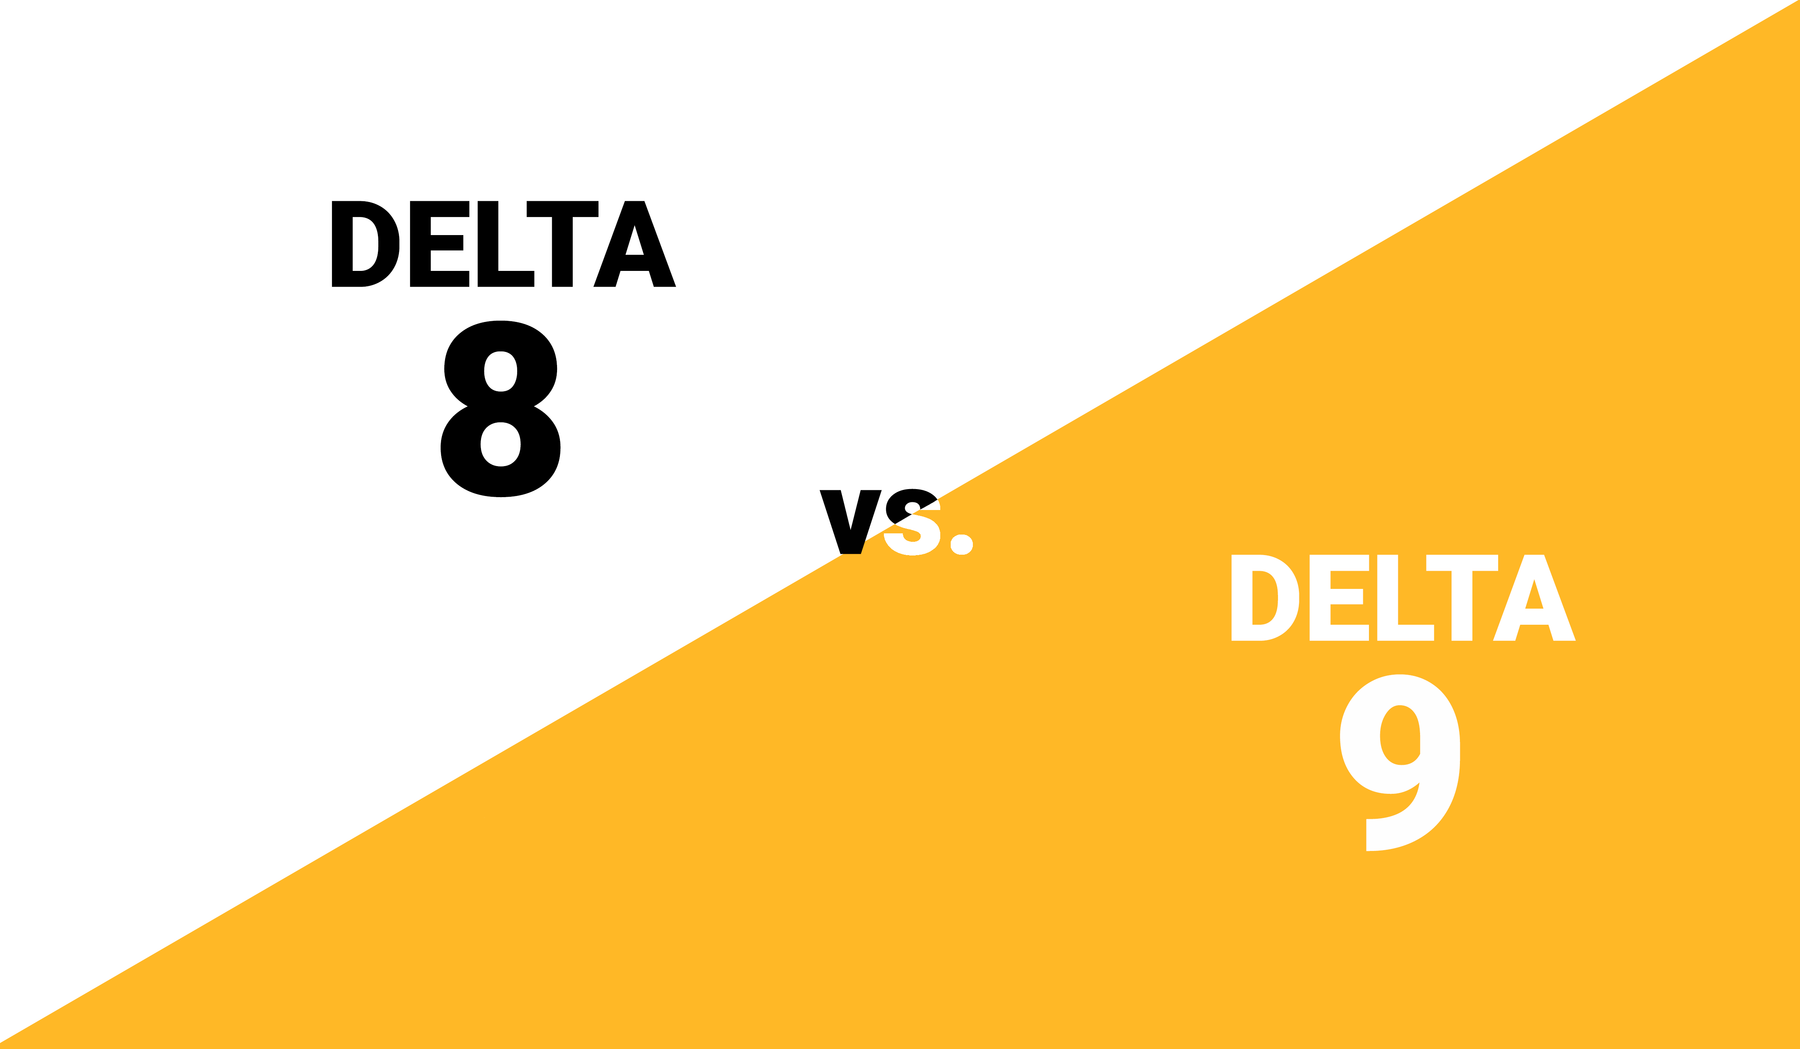 Delta 8 vs. Delta 9